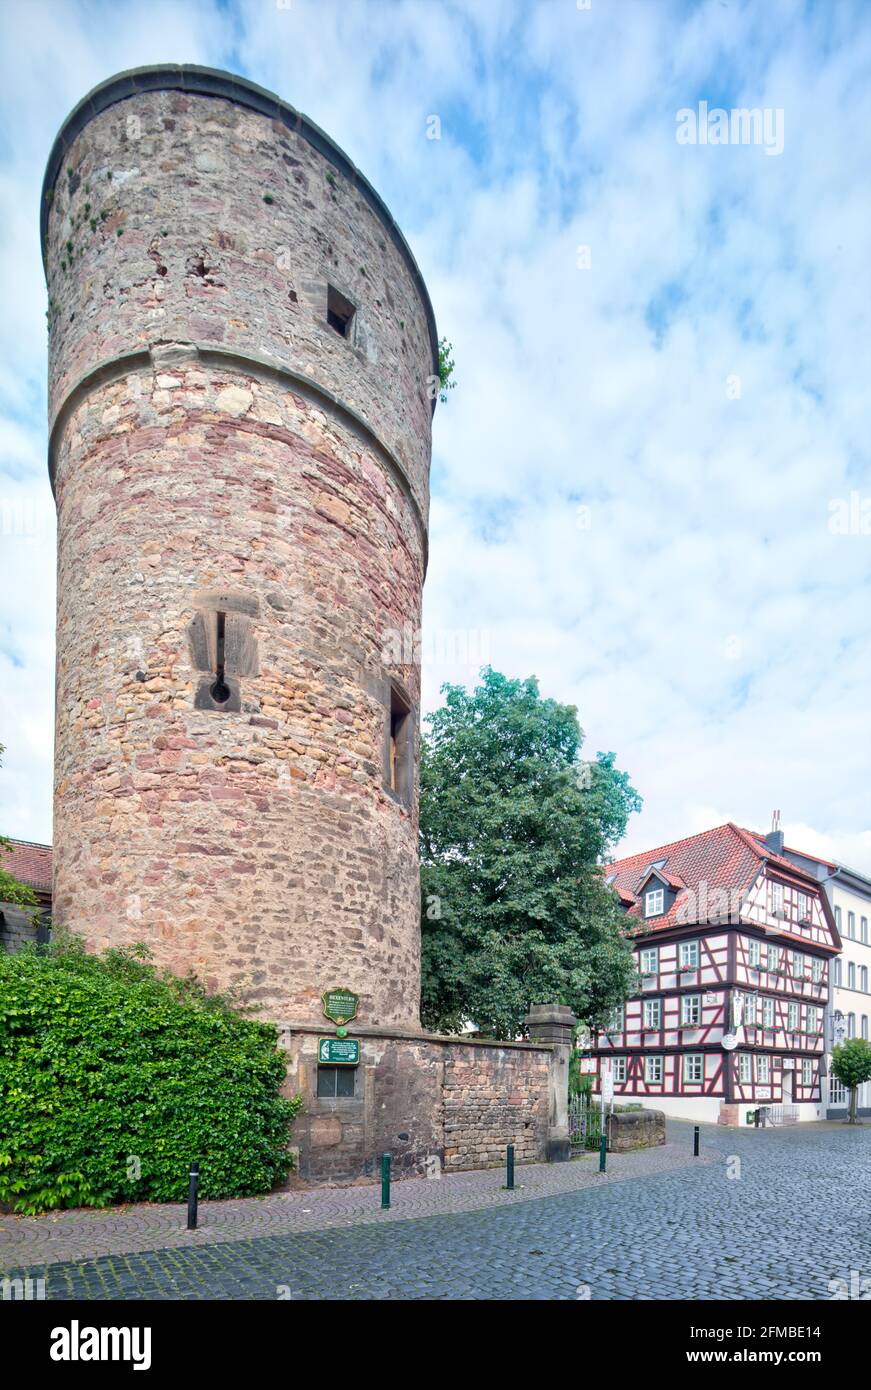 Hexenturm, Hotel am Schloss, half-timbered, facade, Kanalstrasse, summer, Fulda, Hesse, Germany, Europe Stock Photo